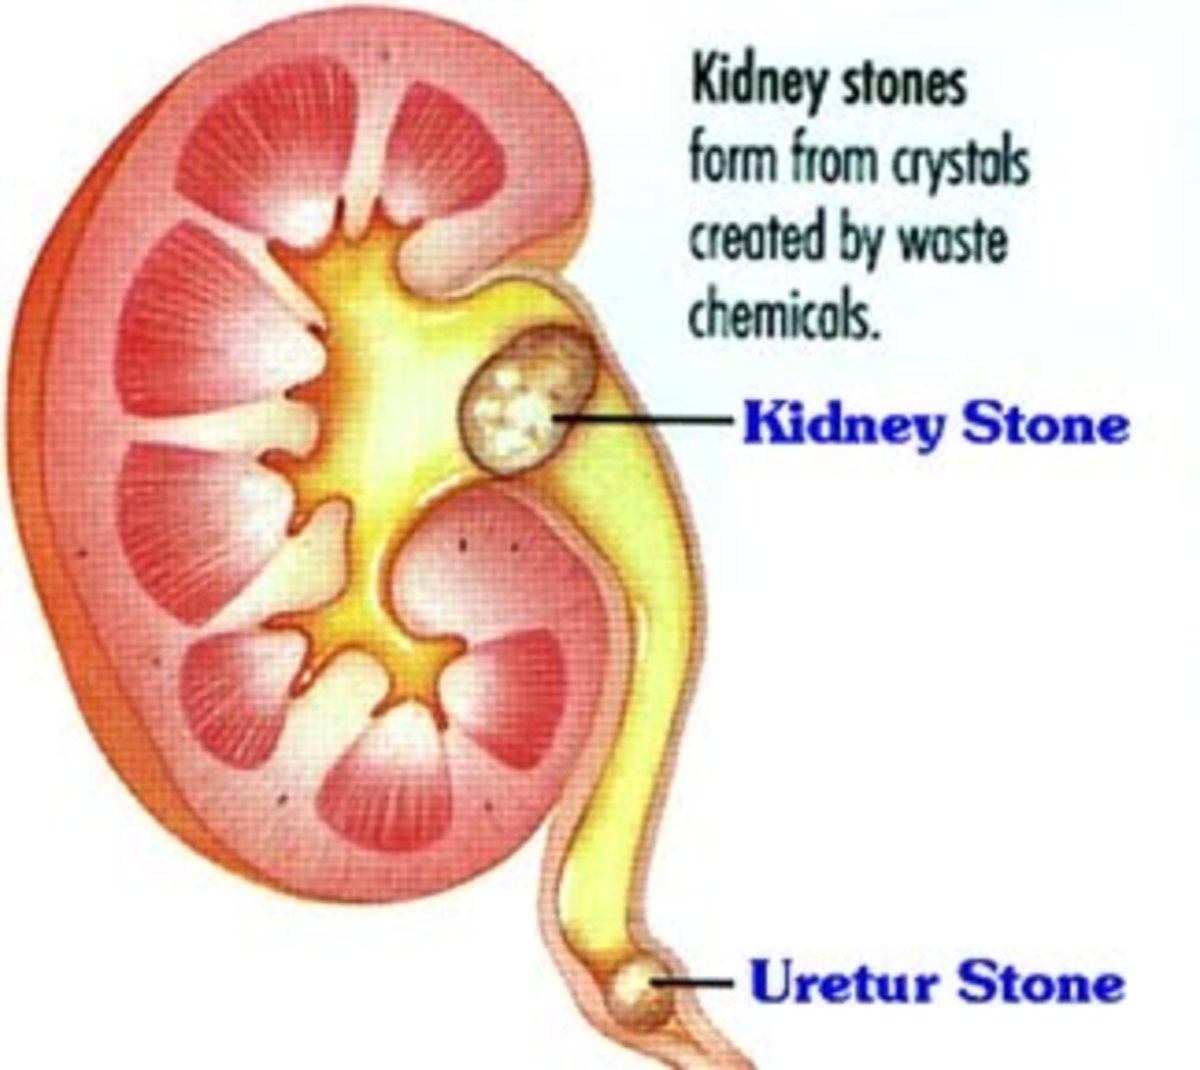 the-pain-of-kidney-stones